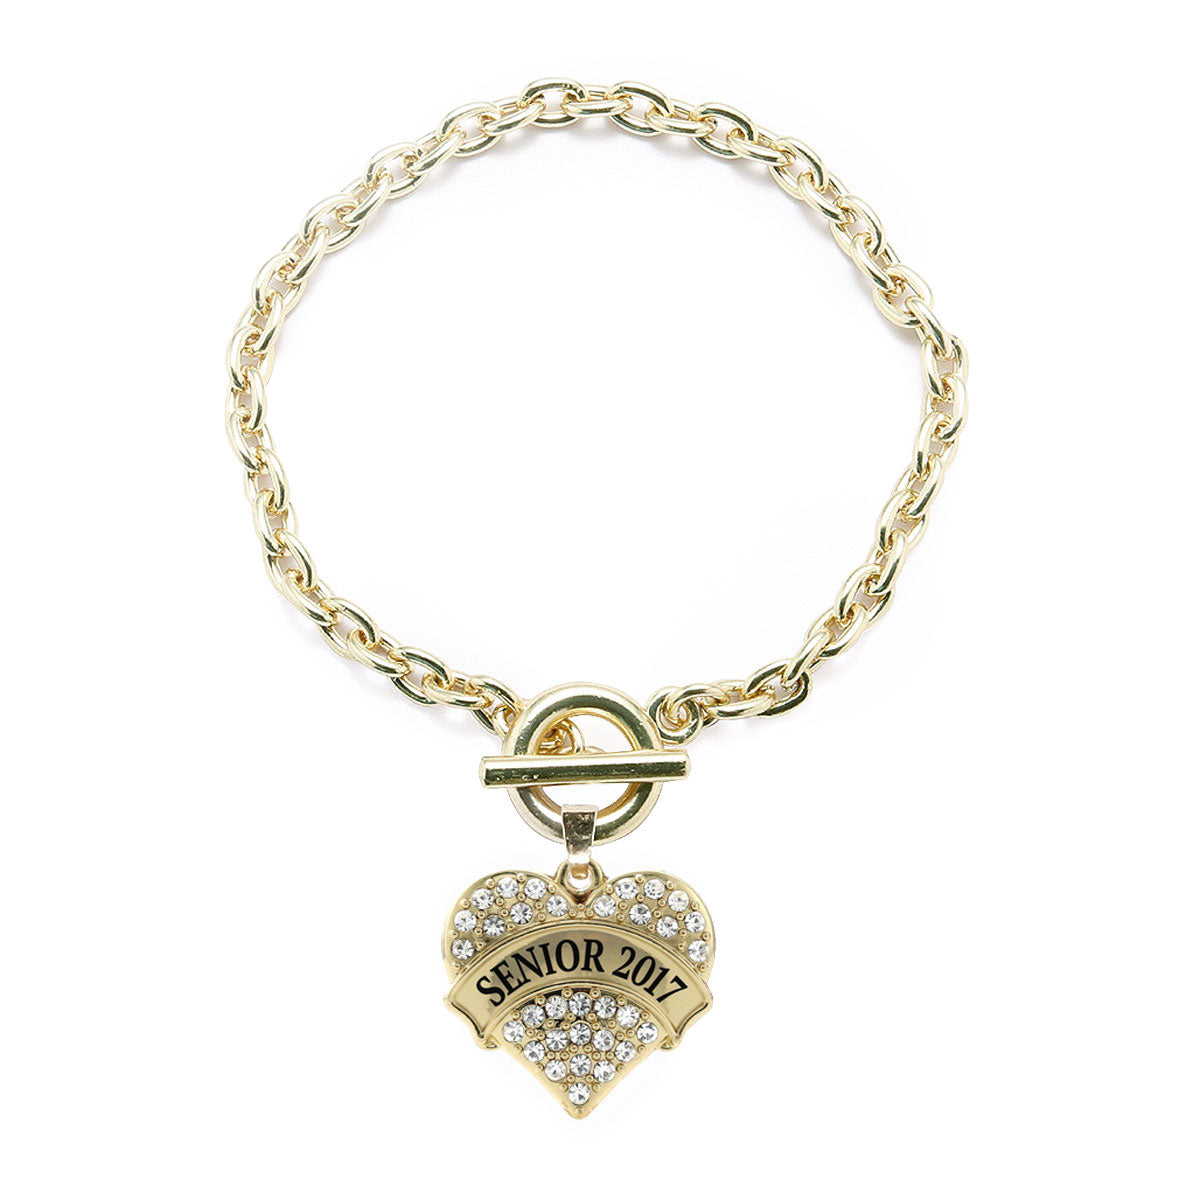 Gold Senior 2017 Pave Heart Charm Toggle Bracelet